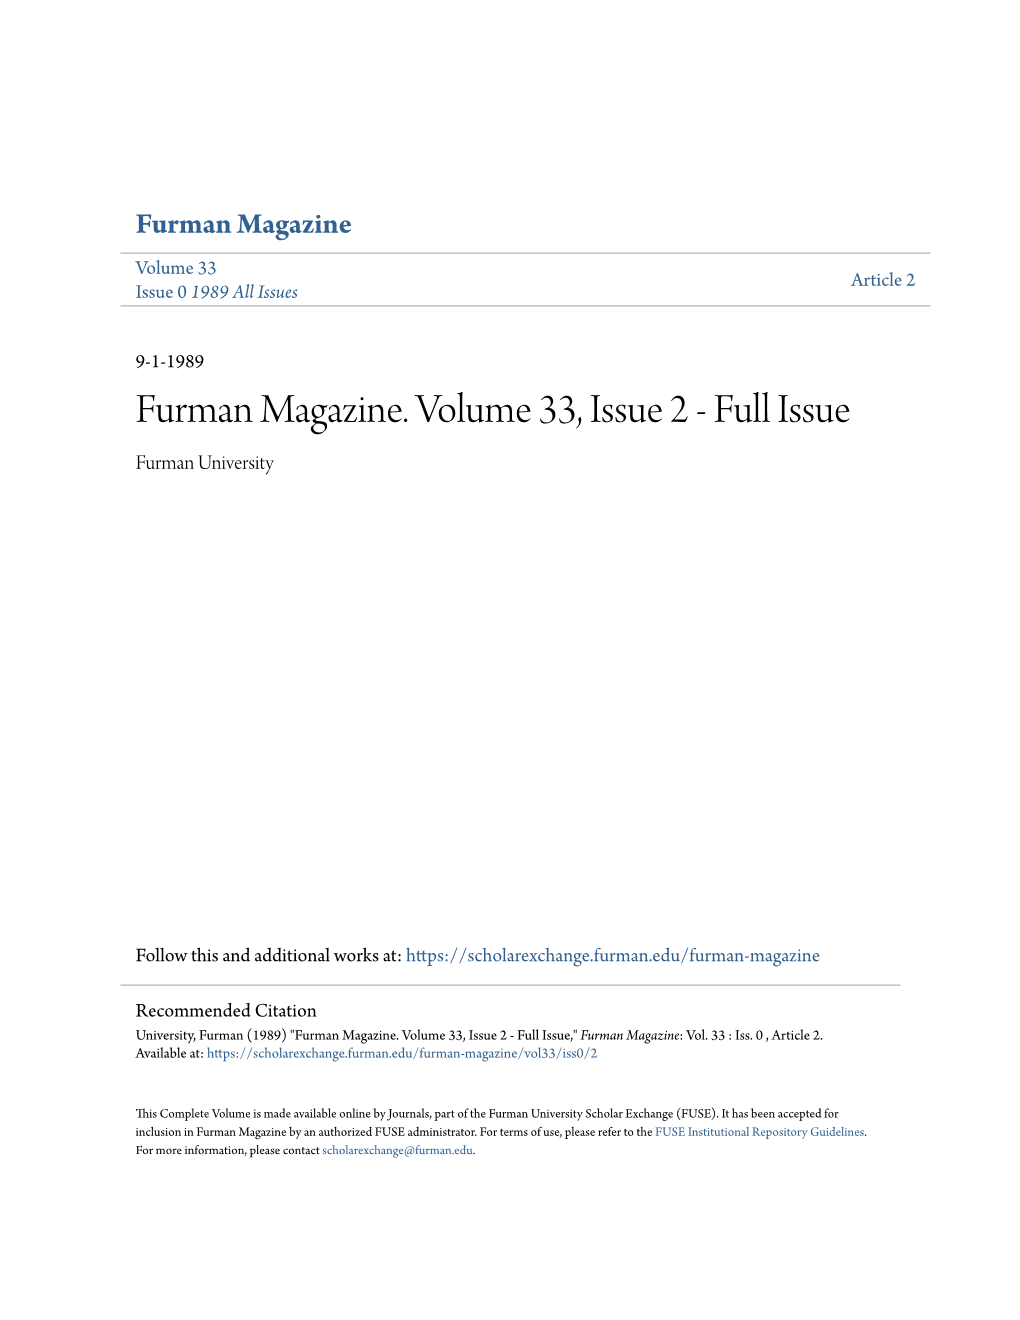 Furman Magazine. Volume 33, Issue 2 - Full Issue Furman University